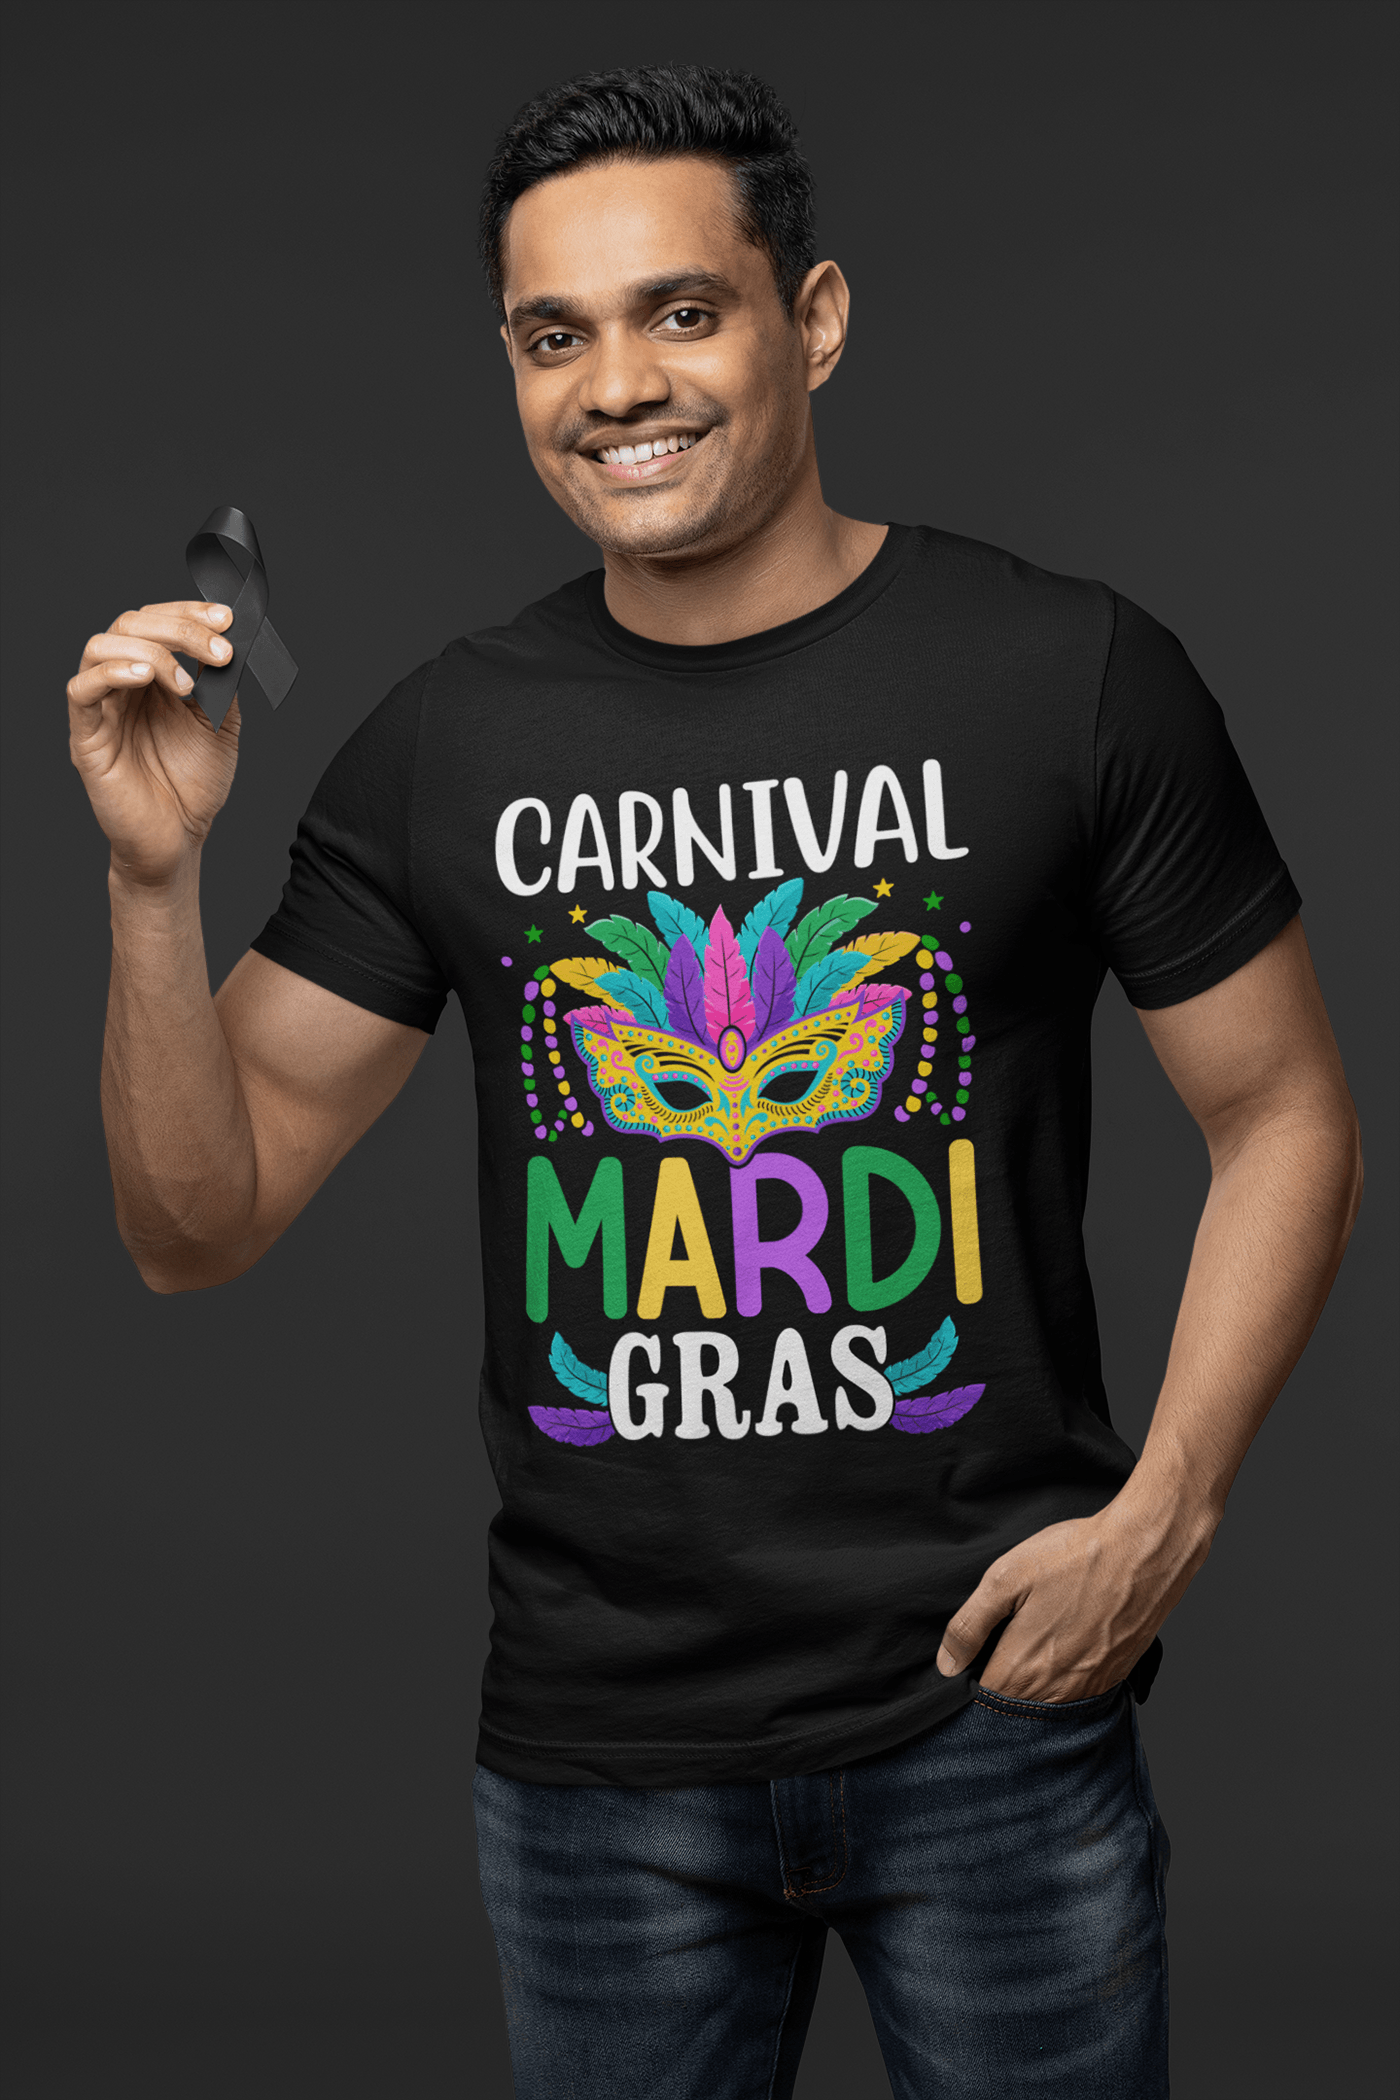 Mardi Gras T-Shirt Design.